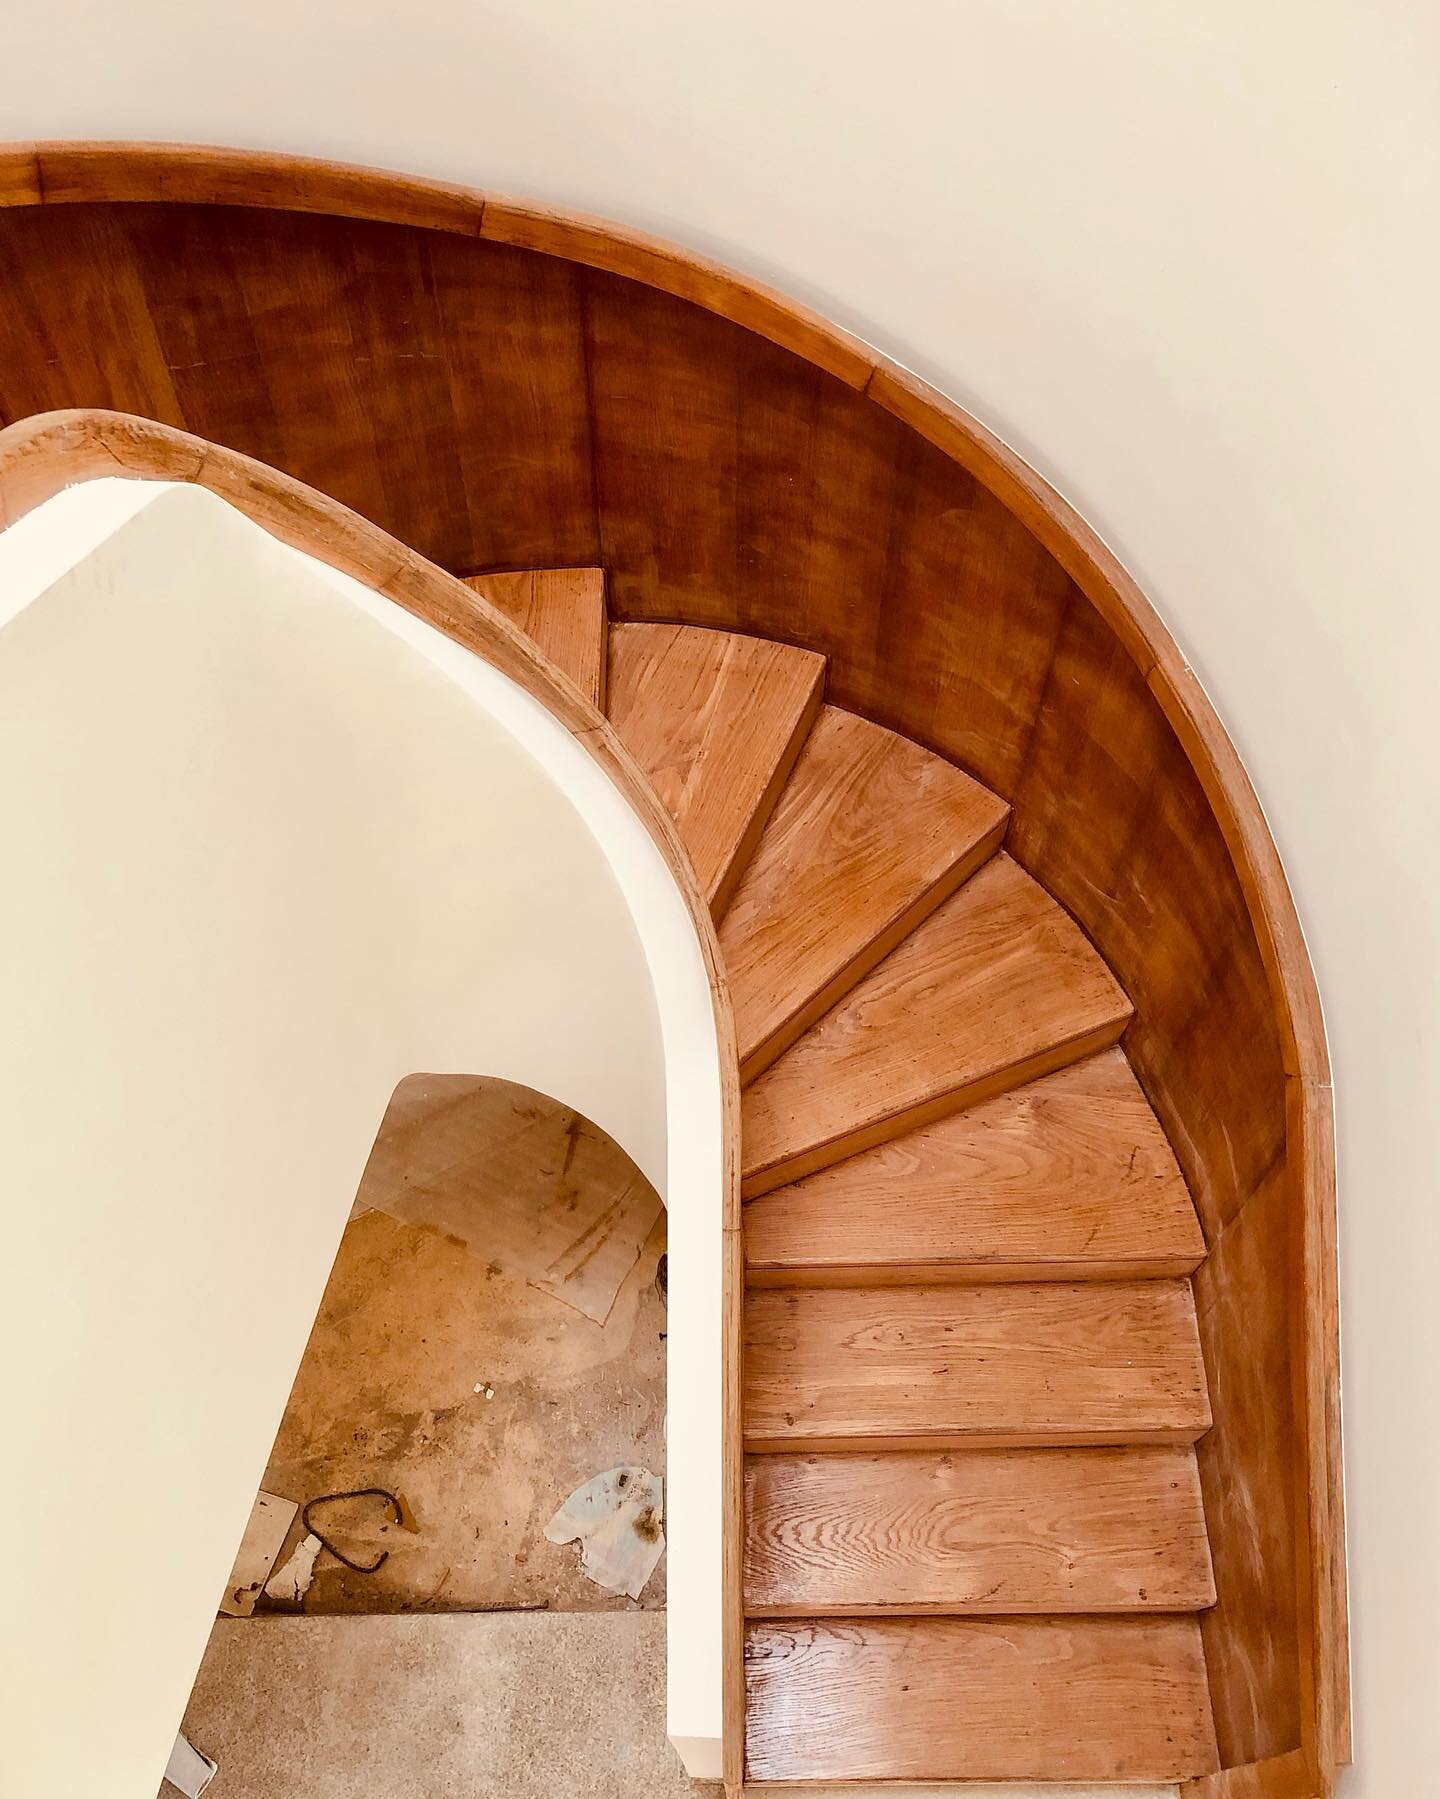 stairway to heaven | Moradia Cousteau | projecto remodela&ccedil;&atilde;o por @eva_atelier
.
.
.
.
#vilanovadegaia #porto #portugal #architecture #arquitectura #arquitetura #arquitecturacontemporanea #underconstruction #art #home #igersportugal #p3t